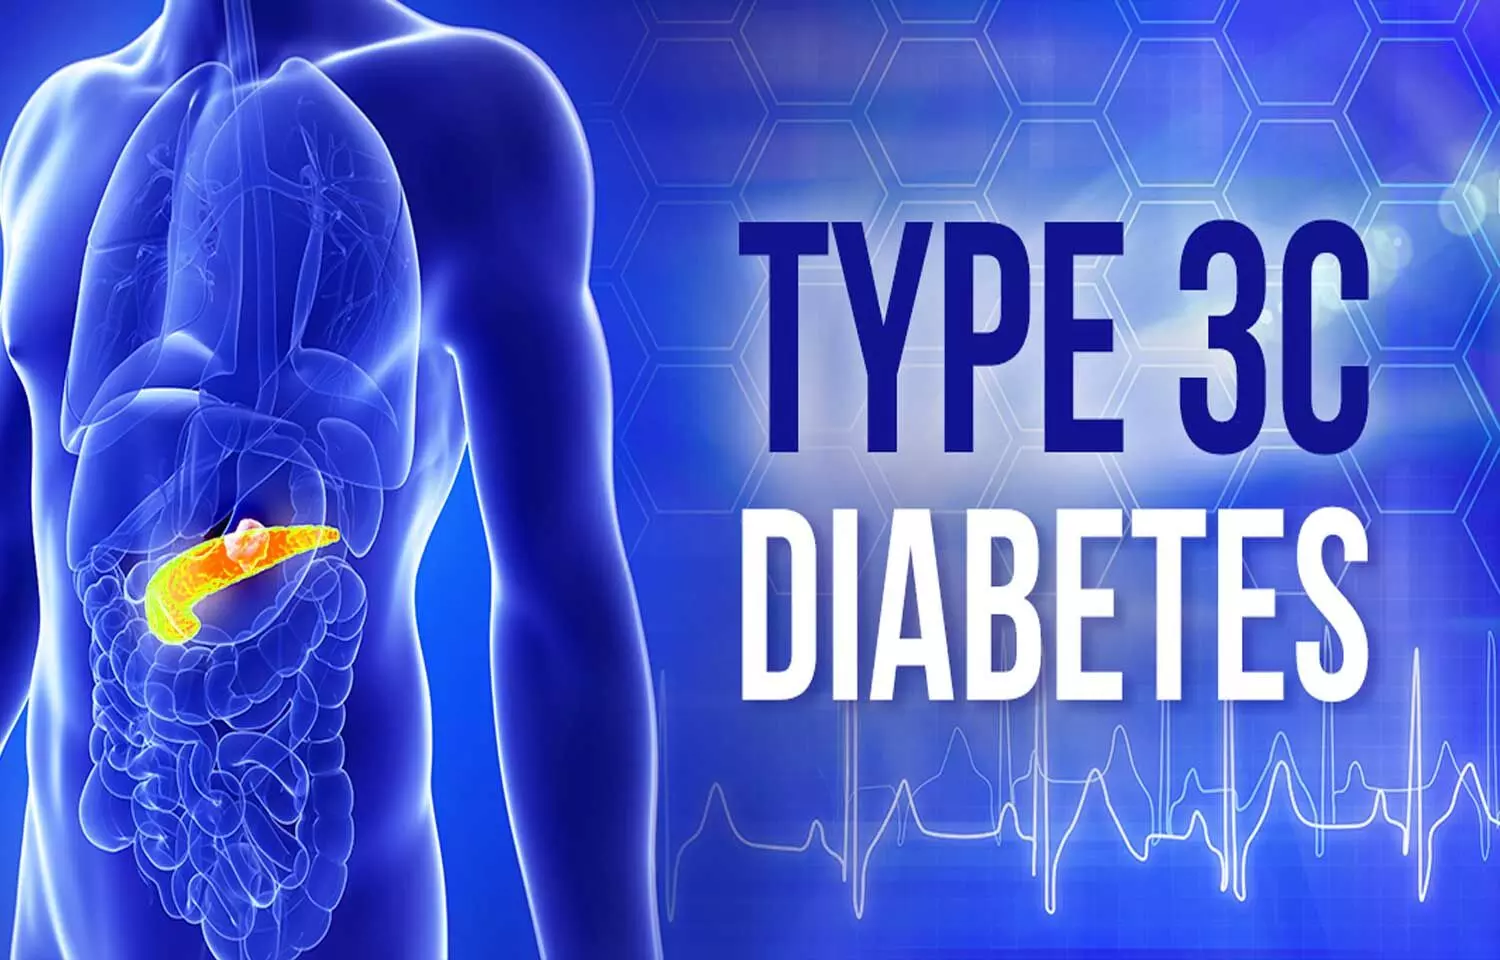 Blood sugar control may improve Hemifacial spasm in type 3c diabetes- Case Report